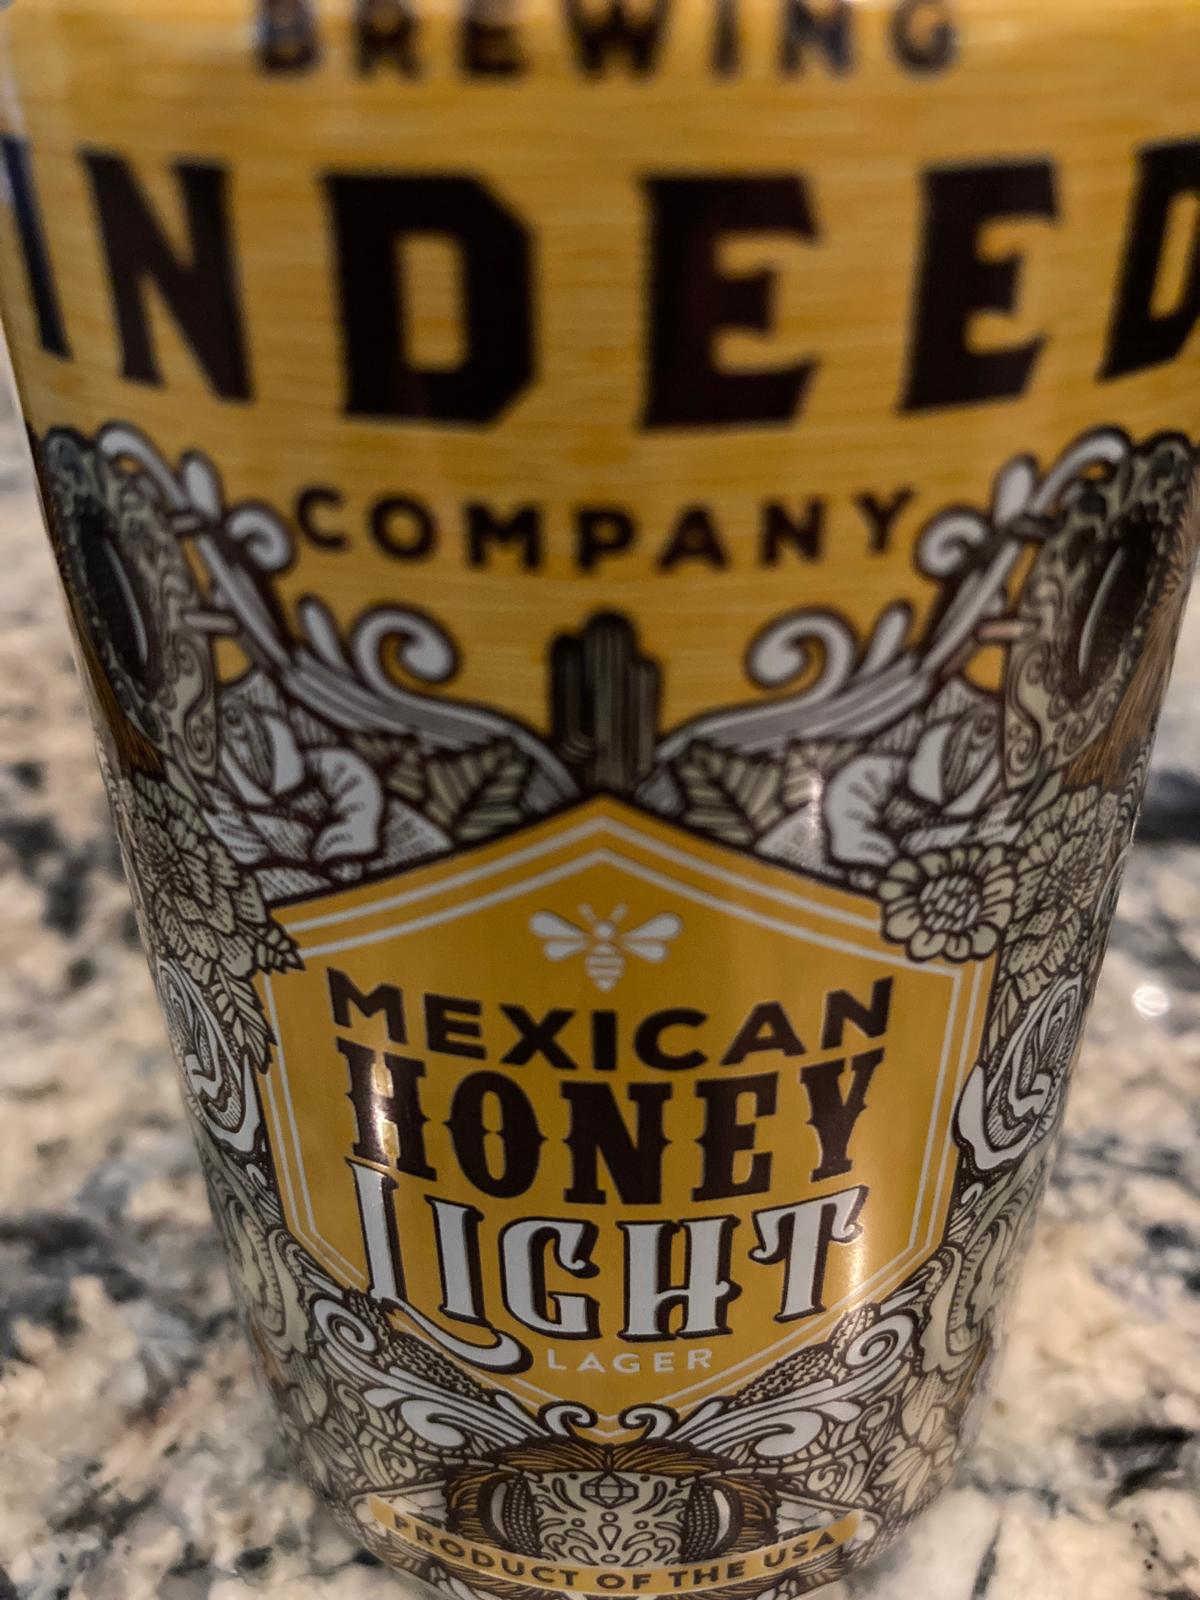 Mexican Honey Light